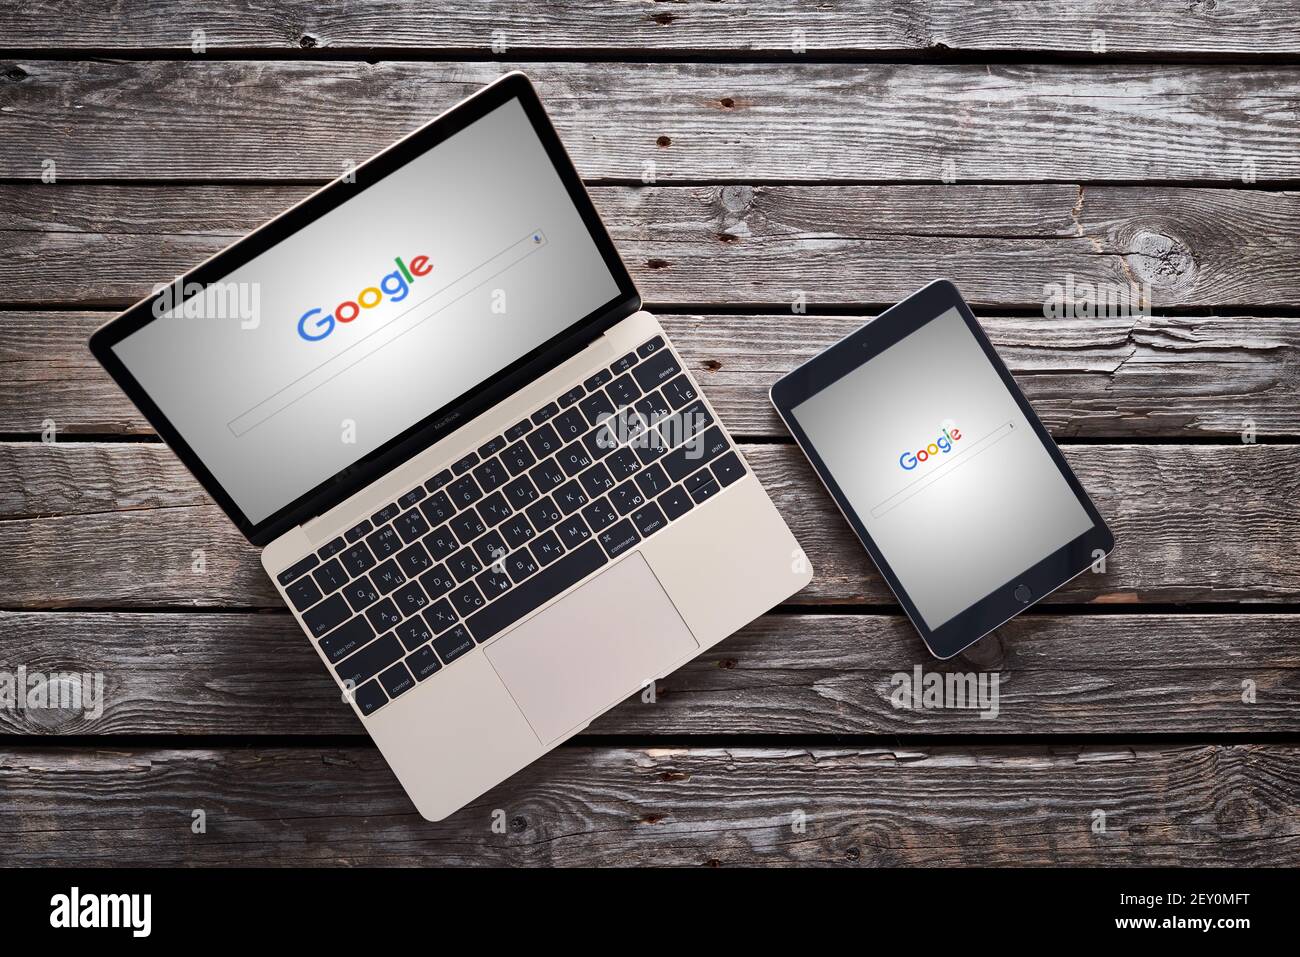 New Google logo on macbook and ipad Stock Photo